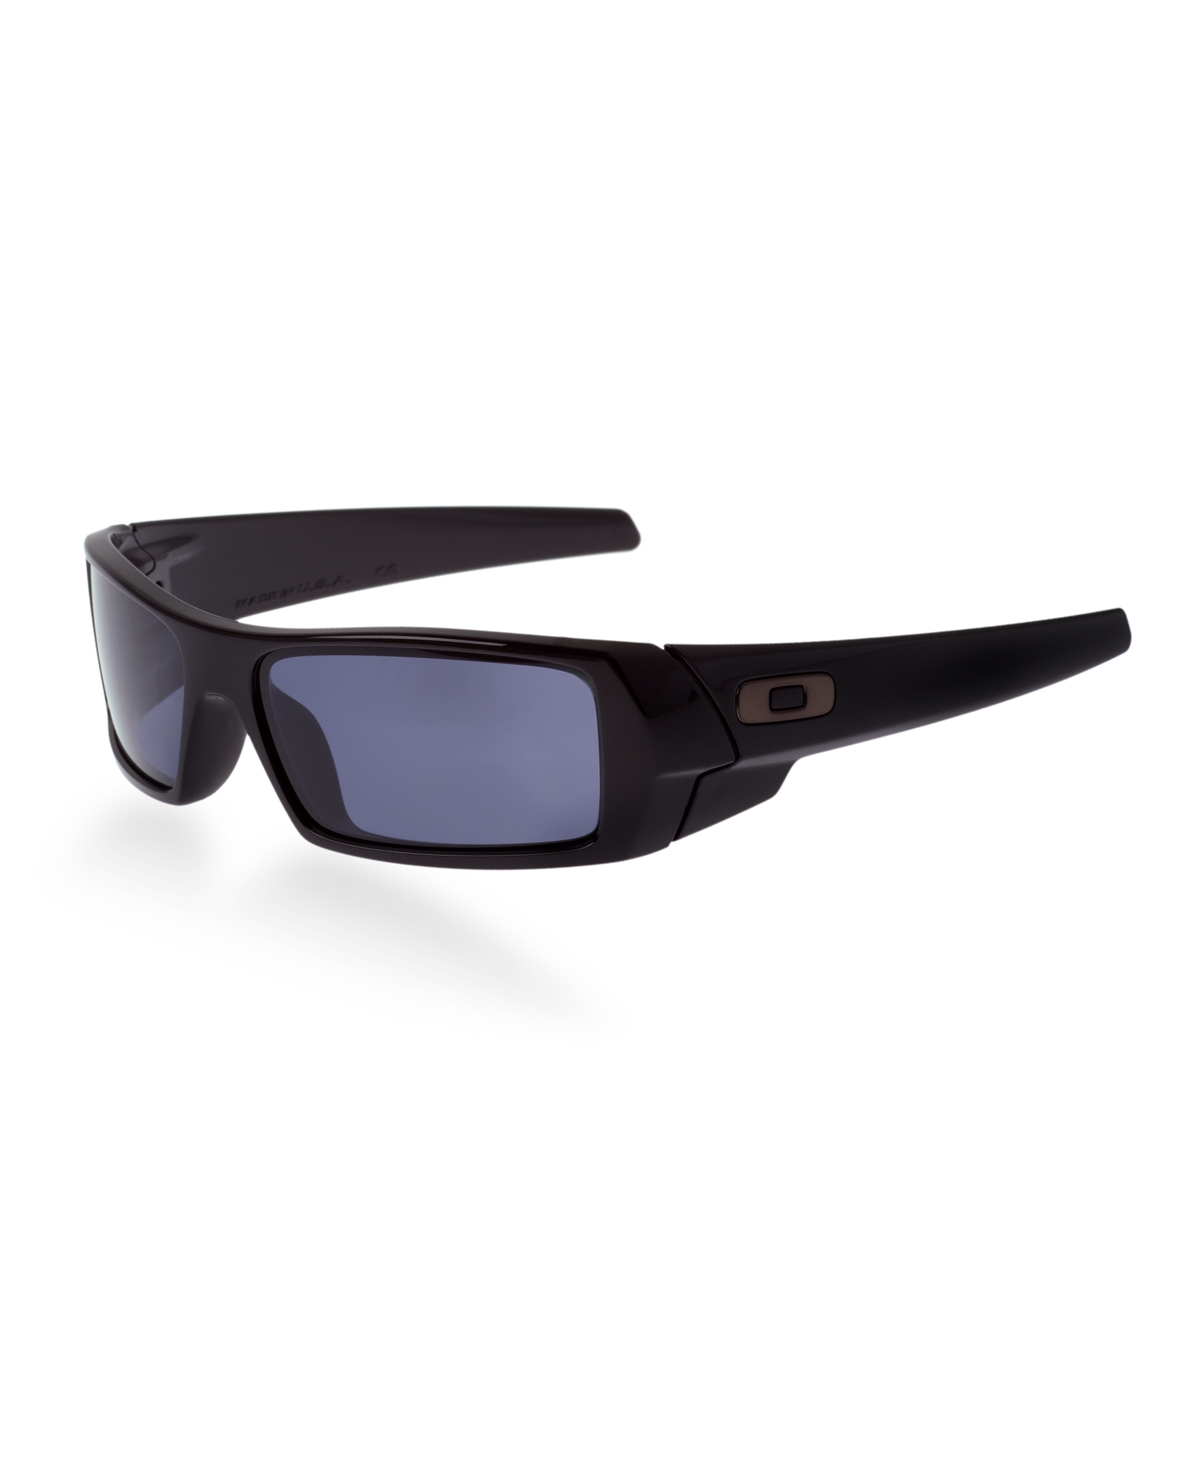 Gascan Sunglasses, OO9014 - Black/Grey